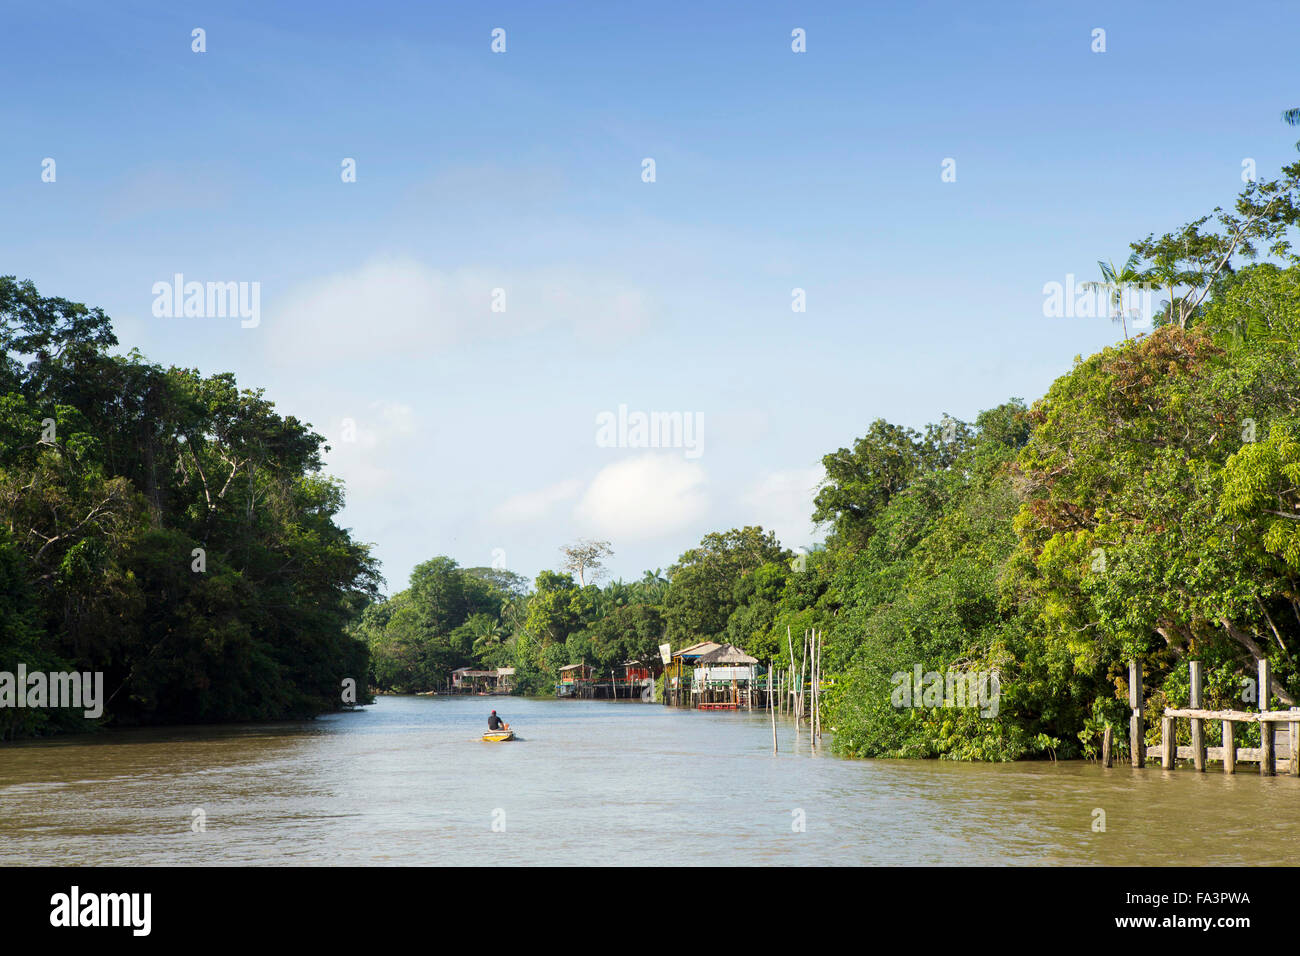 Boat on a creek in the Brazilian Amazon Stock Photo